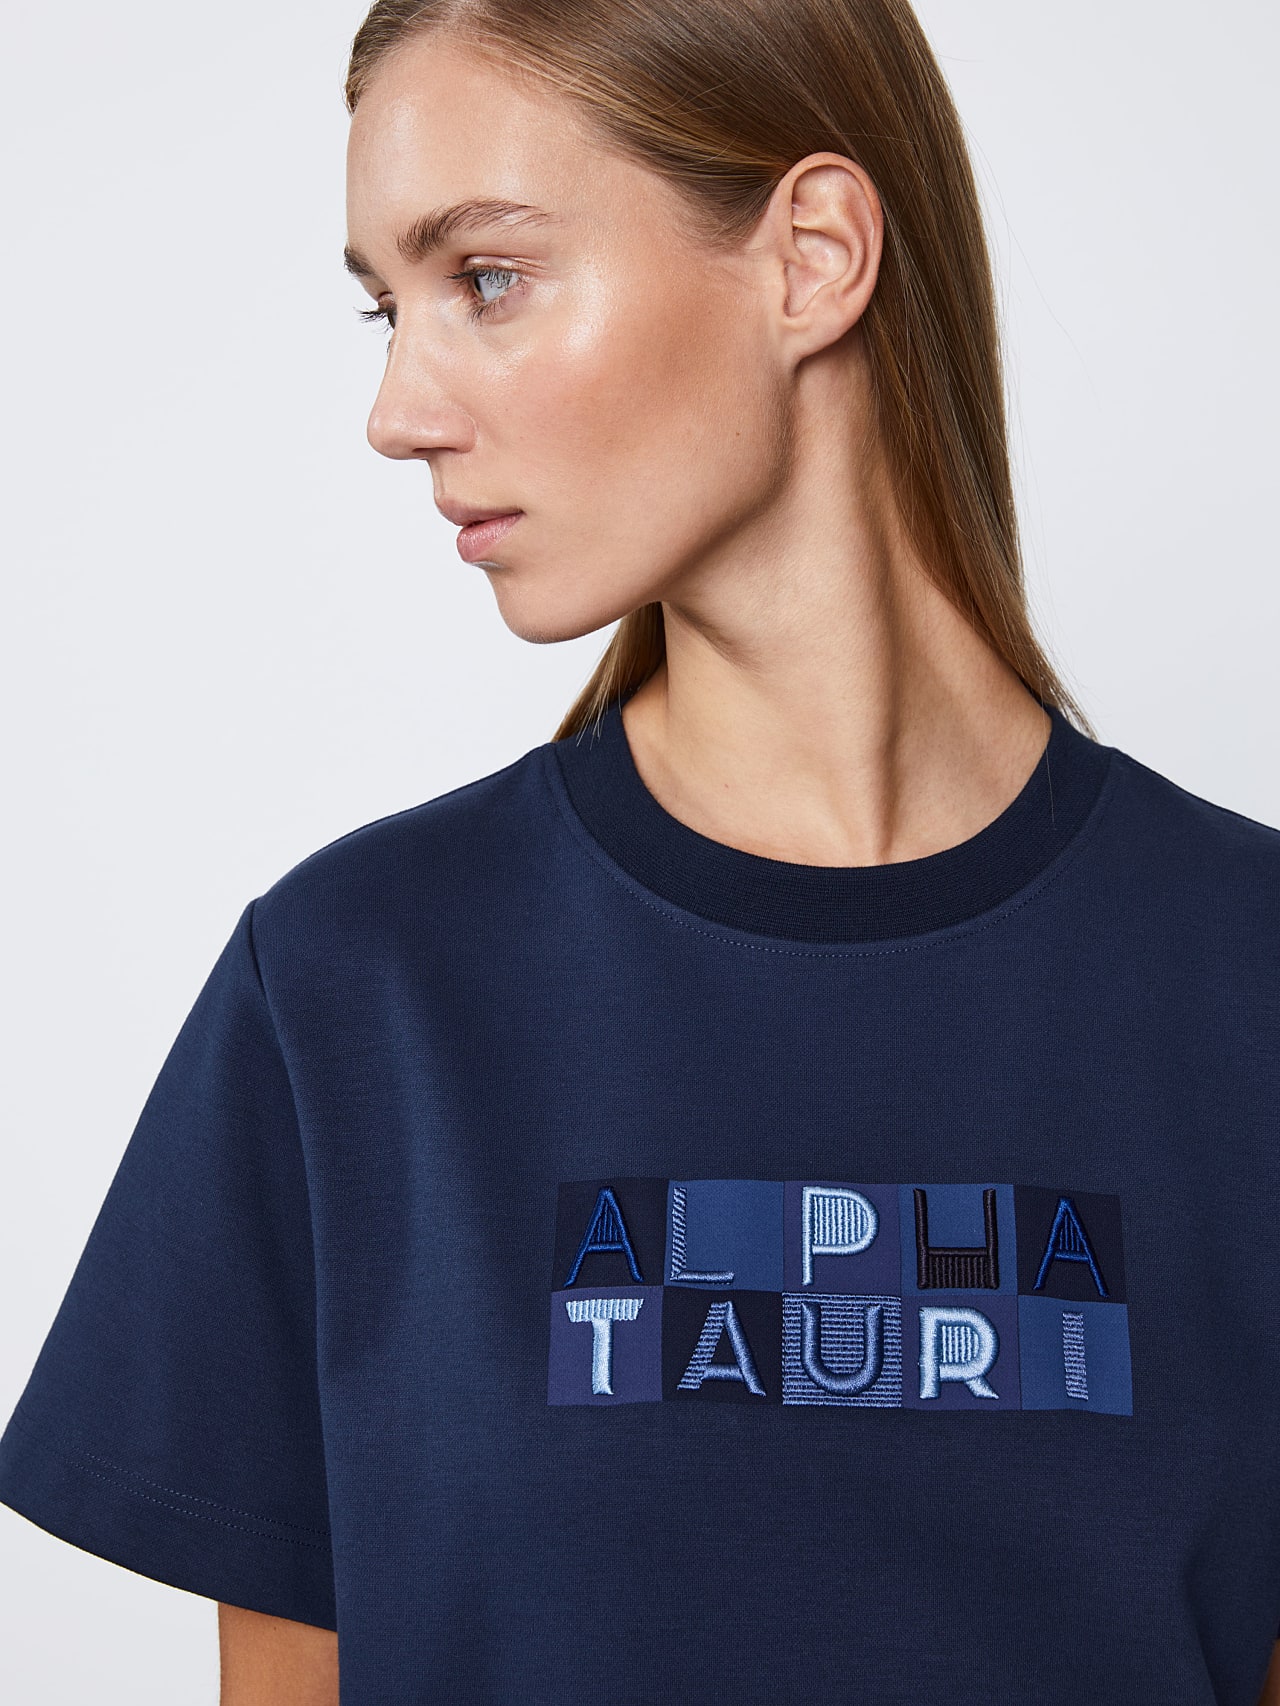 AlphaTauri | STAKU V1.Y6.01 | Sweat Dress with Logo Embroidery in navy for Women